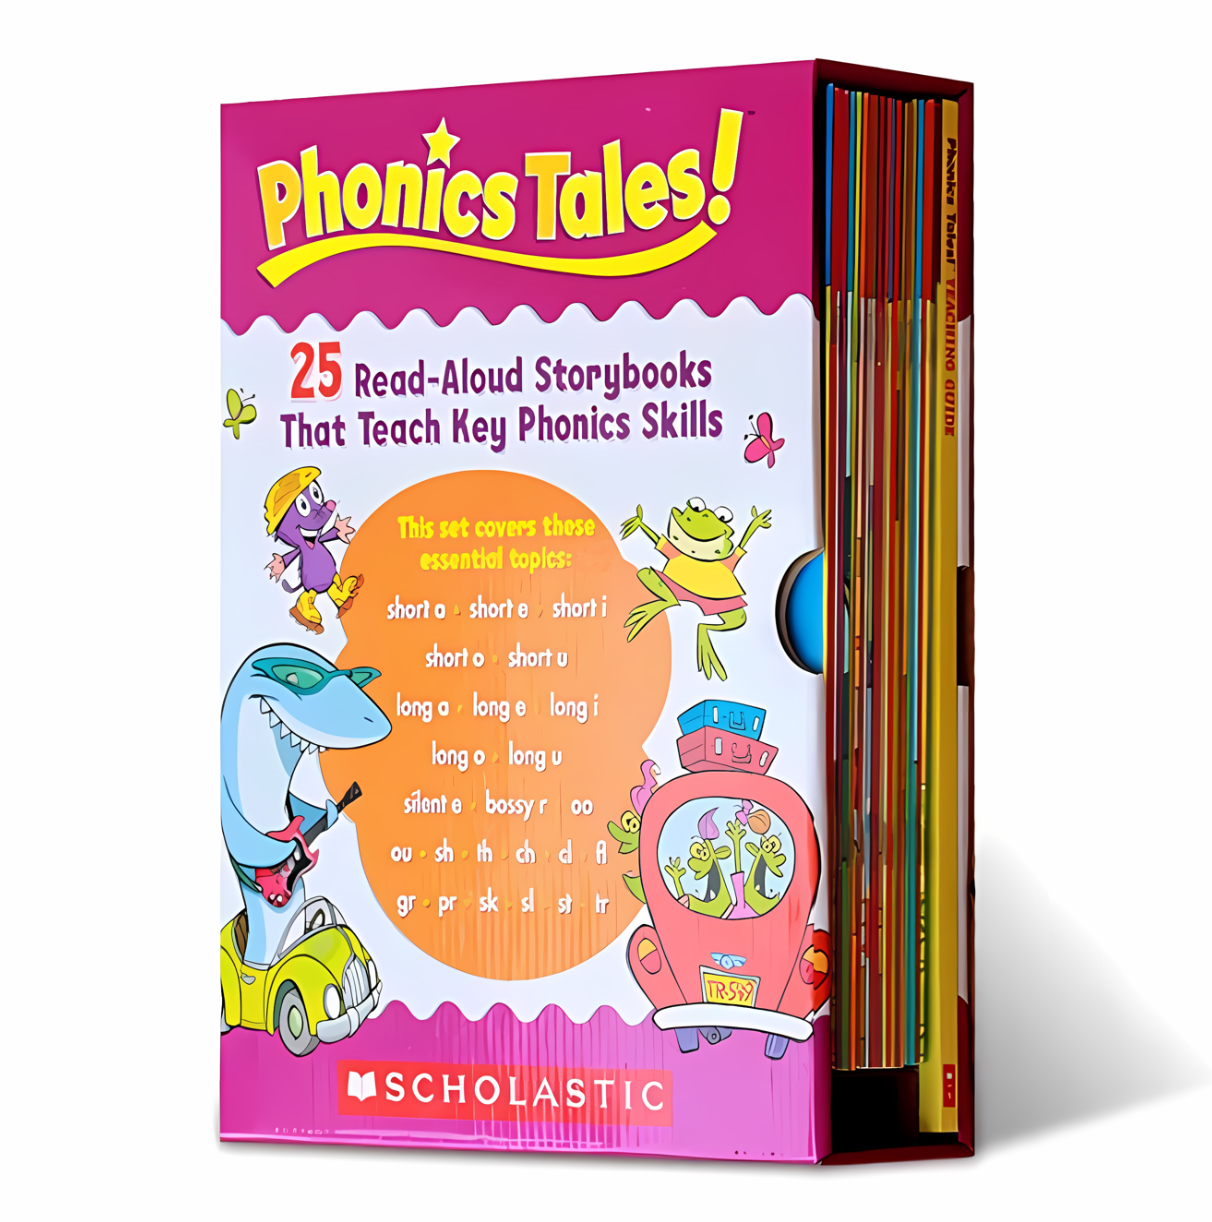 Phonics Tales: 25 Read-Aloud Storybooks That Teach Key Phonics Skills